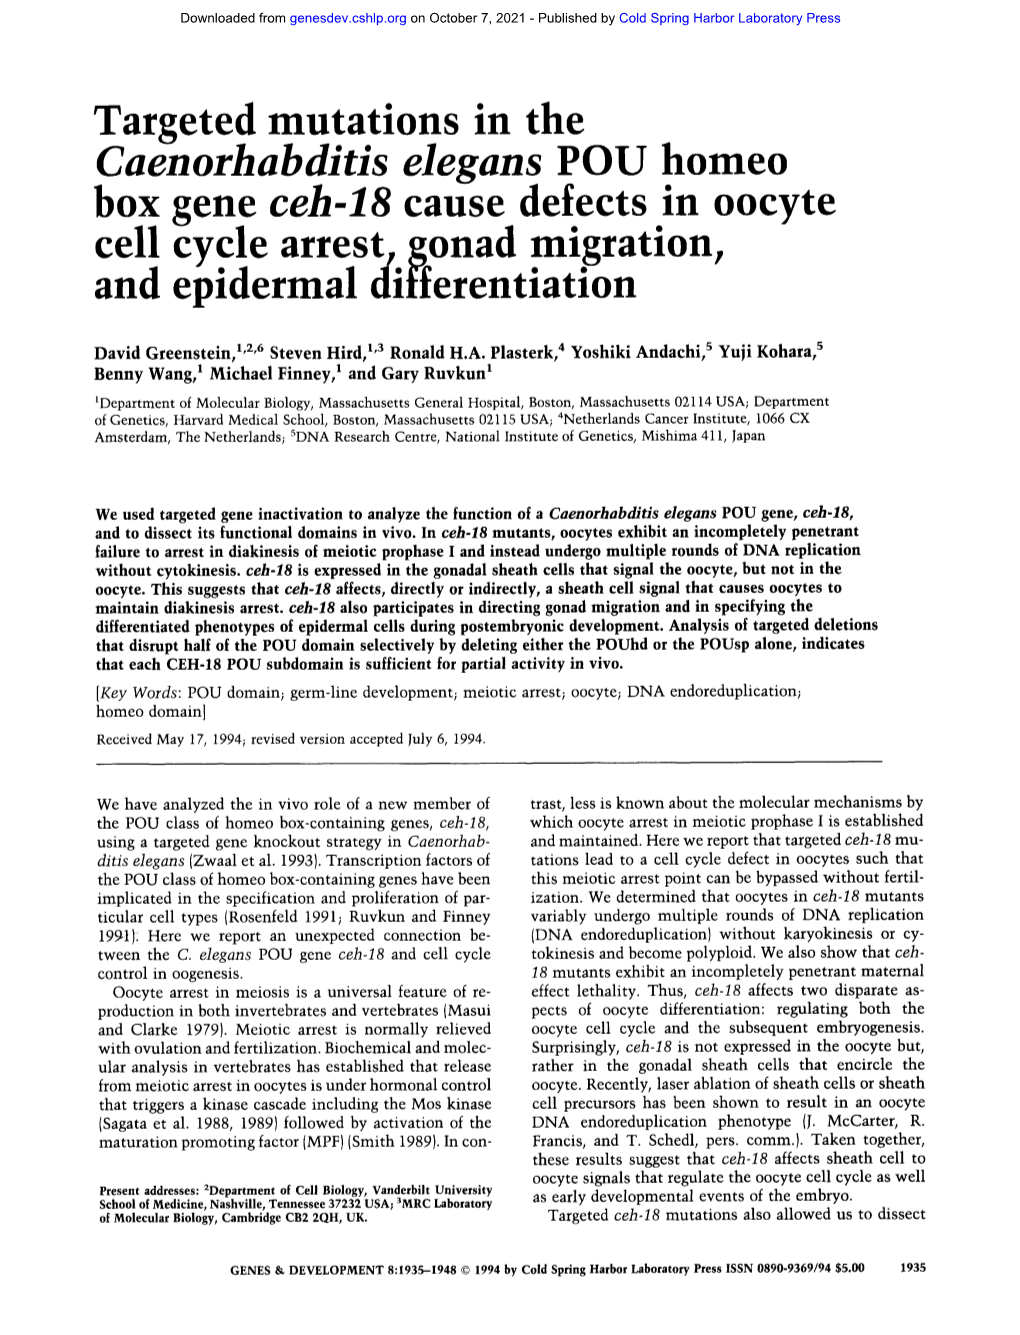 Caenorhabditis Elegans POU Homeo Box Gene Ceh-18 Cause Defects in Oocyte Cycle Arrest, Gonad Mi.Gration, Epidermal Differentianon